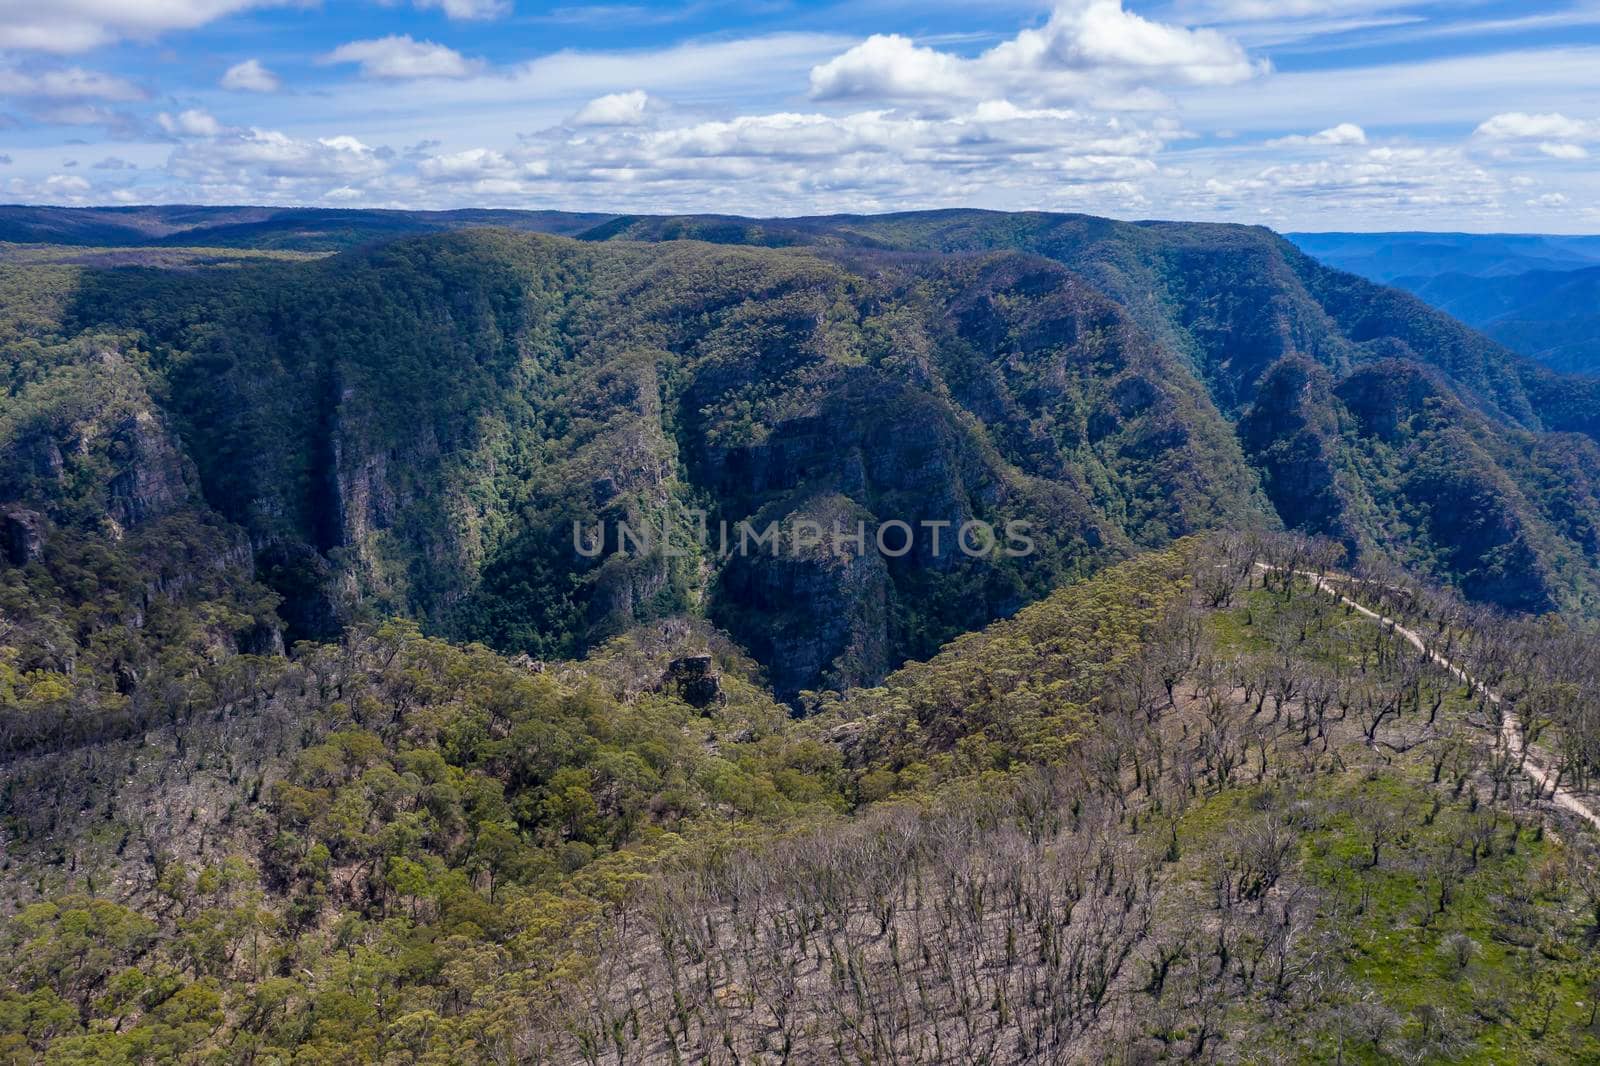 Aerial view of Kanangra-Boyd National Park in regional Australia by WittkePhotos